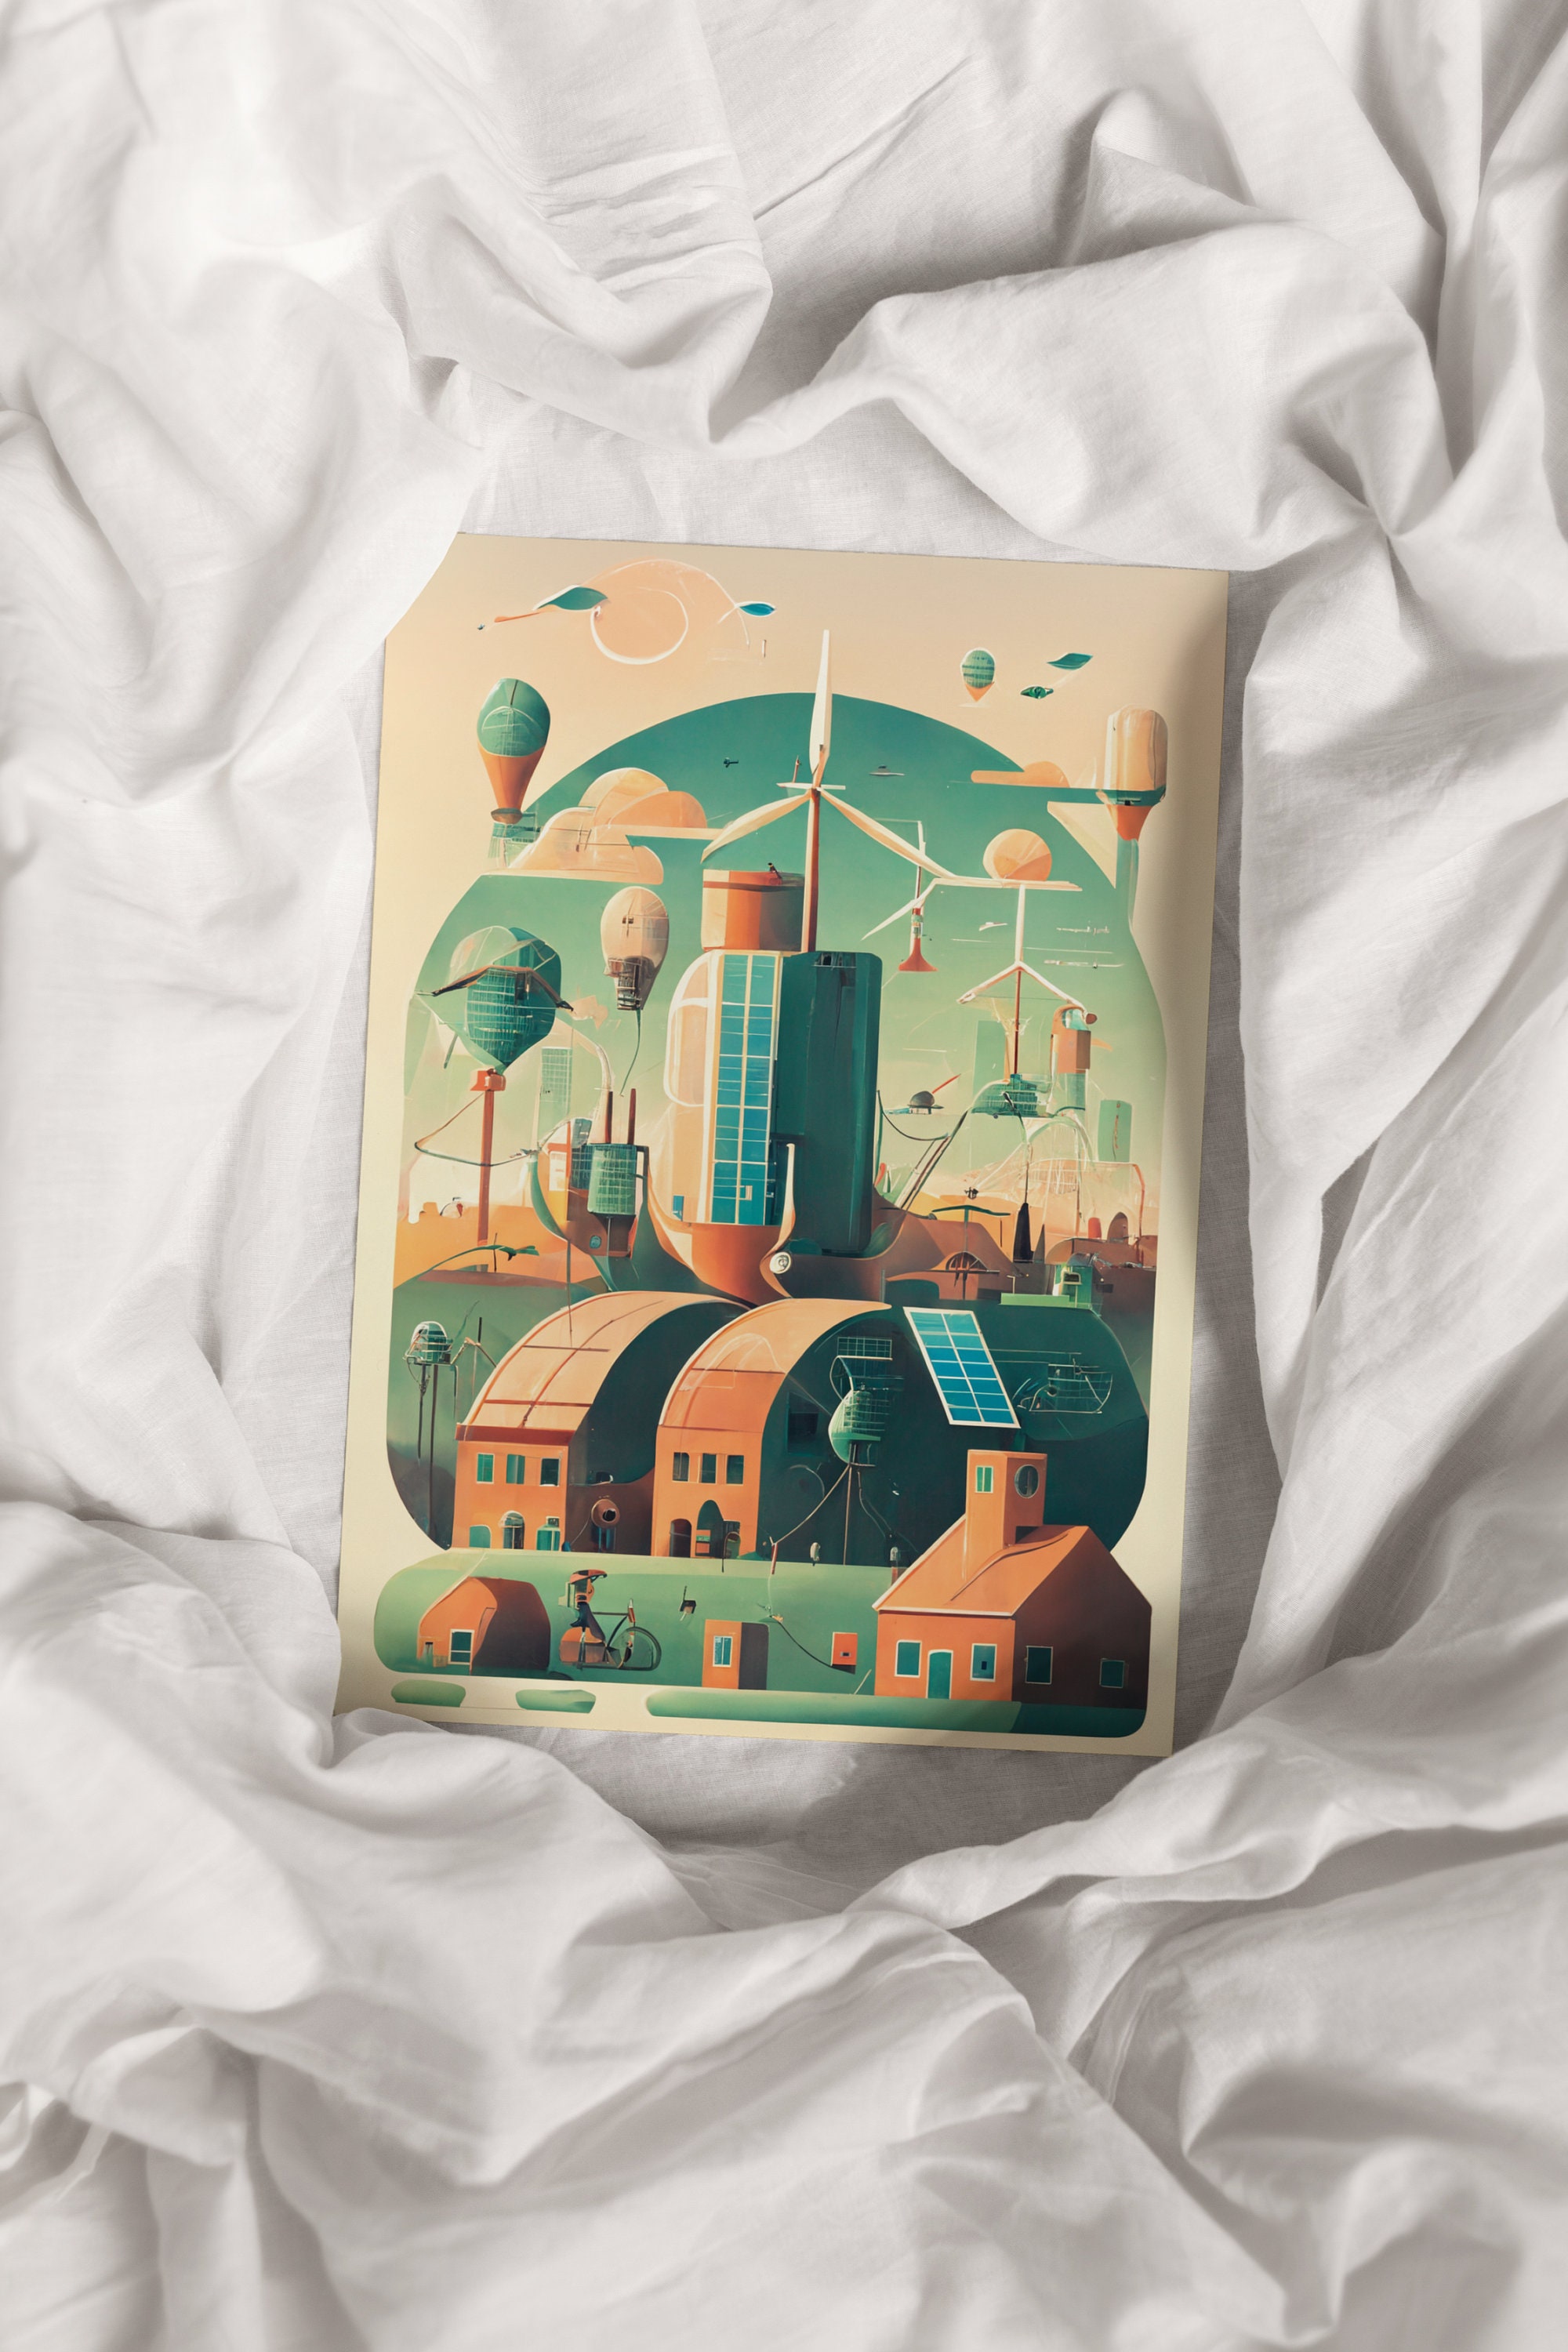 Digital Art Print | Beautiful Solarpunk City Environment |  Landscape/Horizontal | Printable Digital Download | Wall Art | Decor &  Background